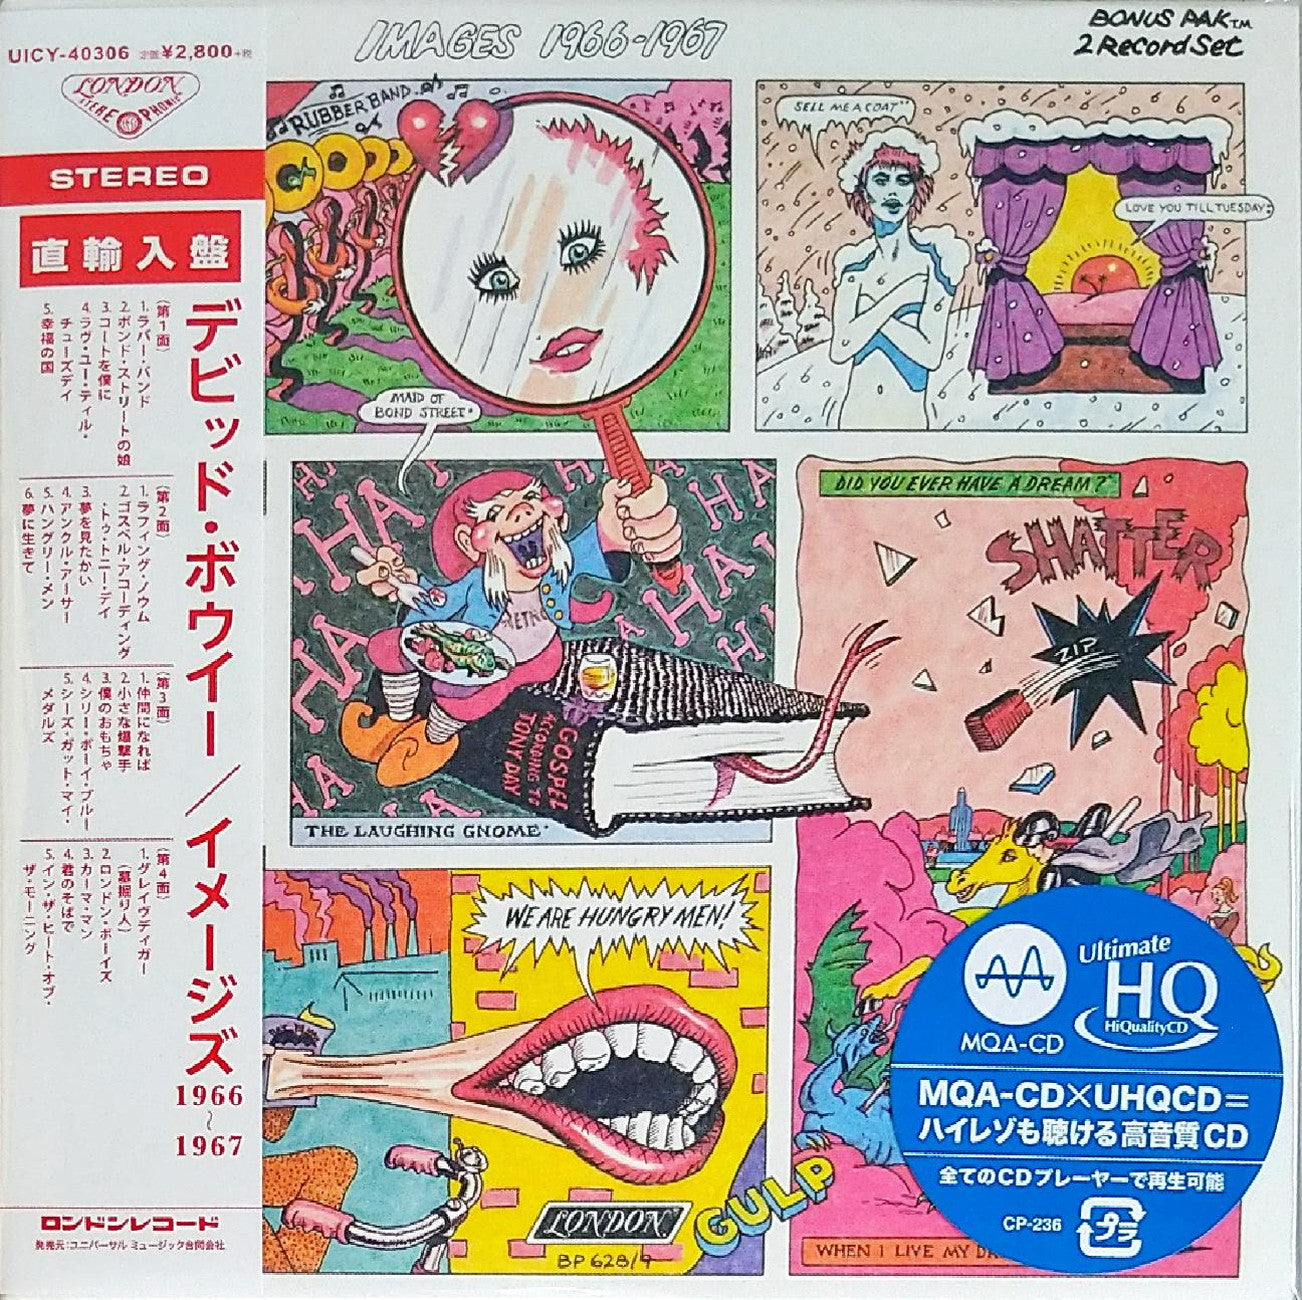 David Bowie - Images 1966-1967 - Japan  Mini LP UHQCD Limited Edition